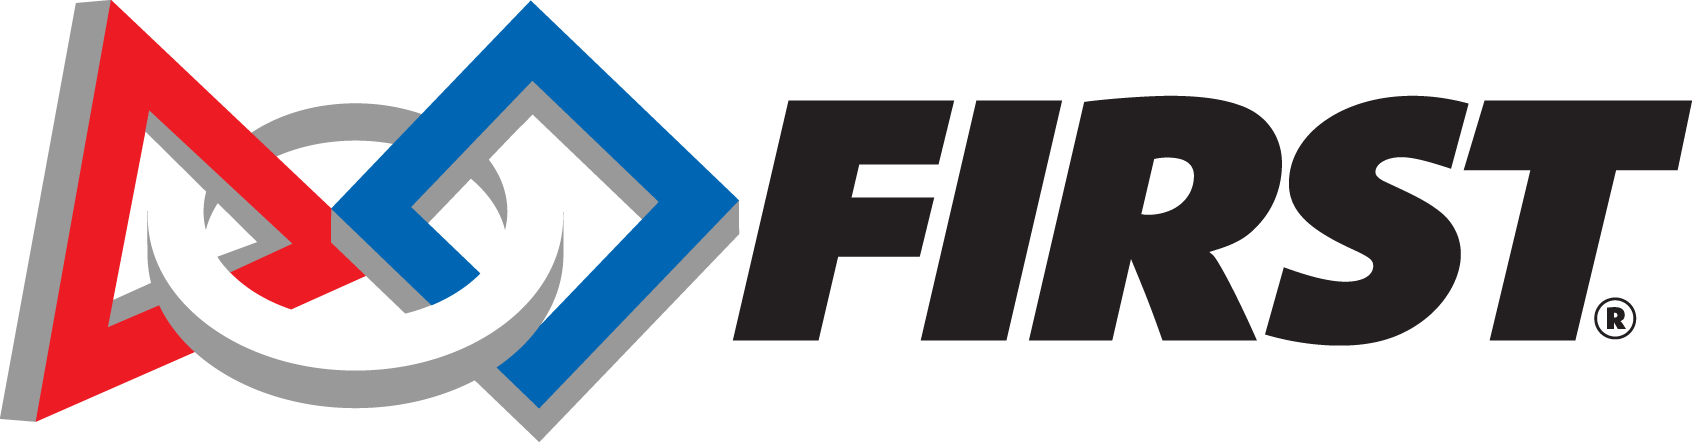 Mississippi FTC Championships logo